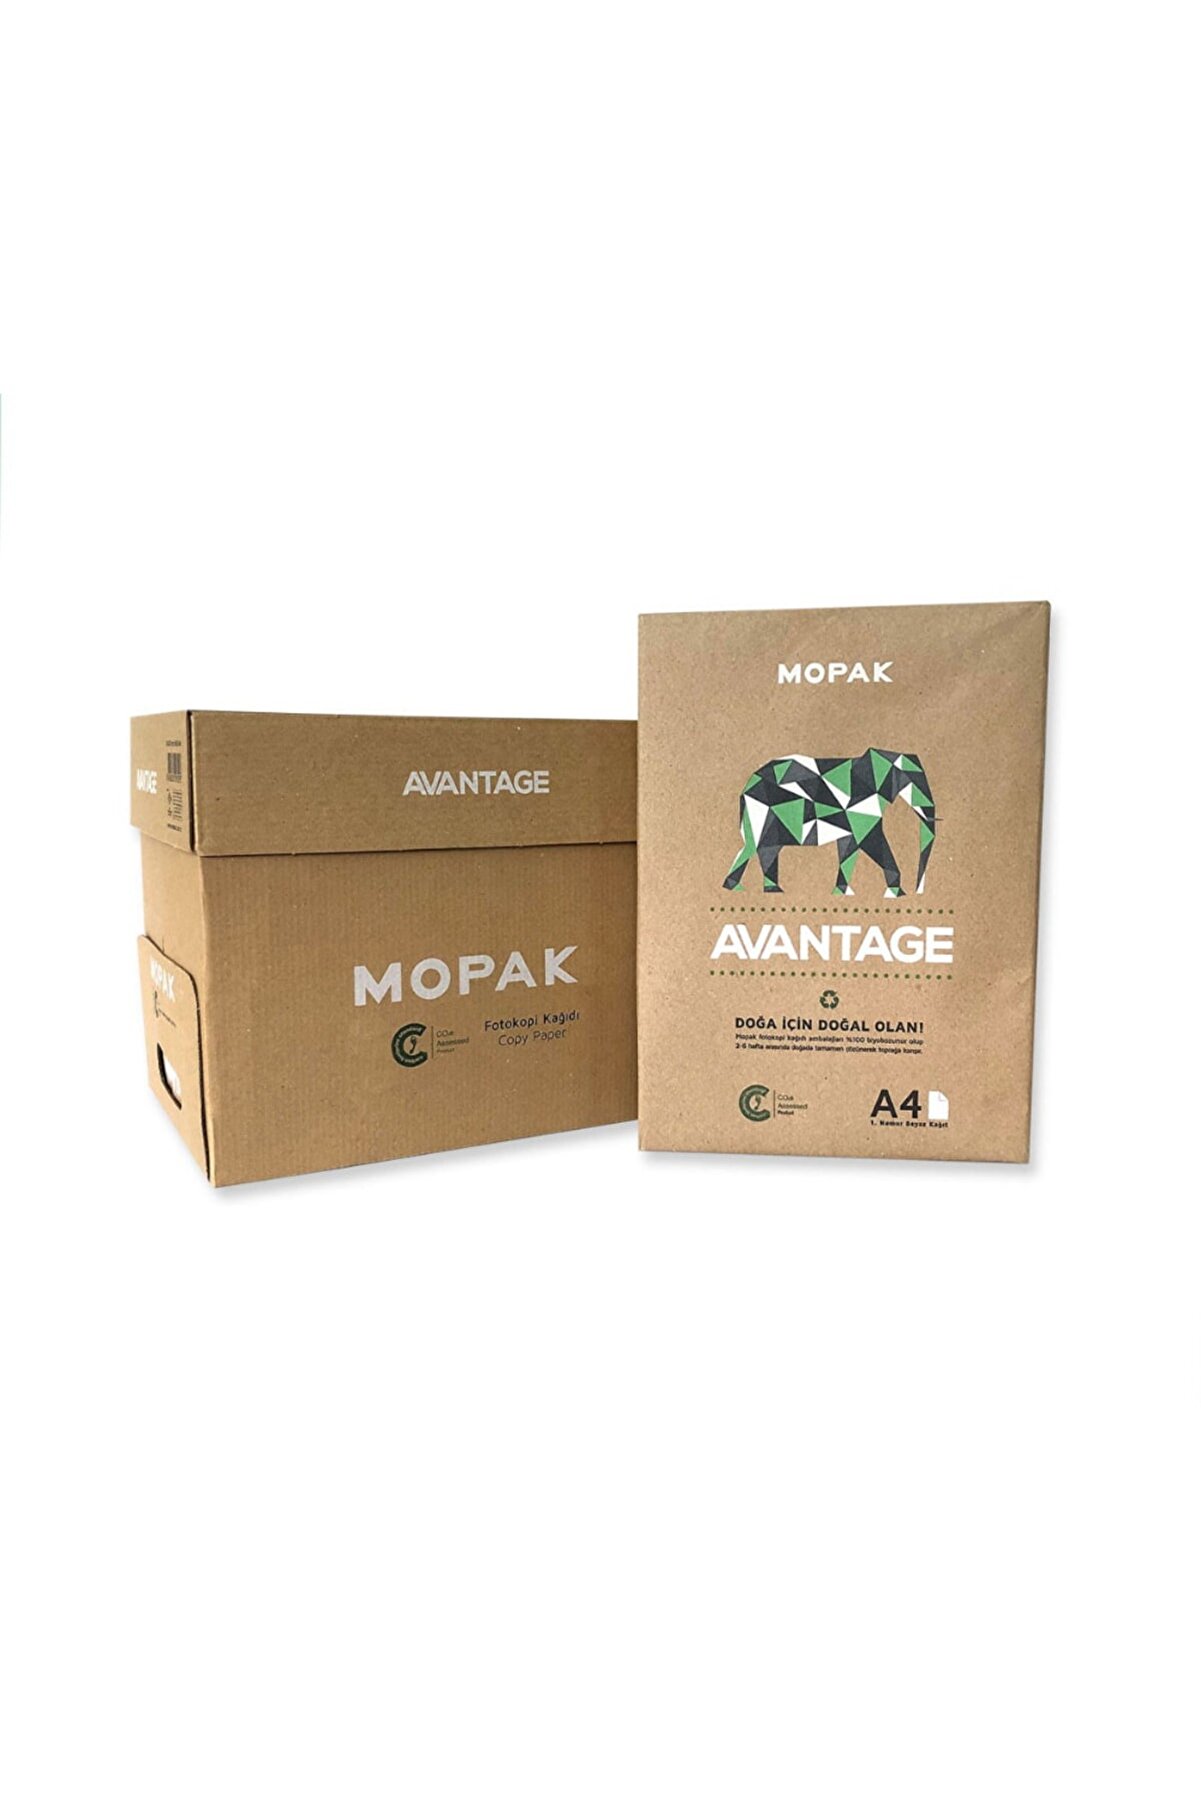 Mopak Avantage Ofis A4 Fotokopi Kağıdı 1 Koli 5 Paket